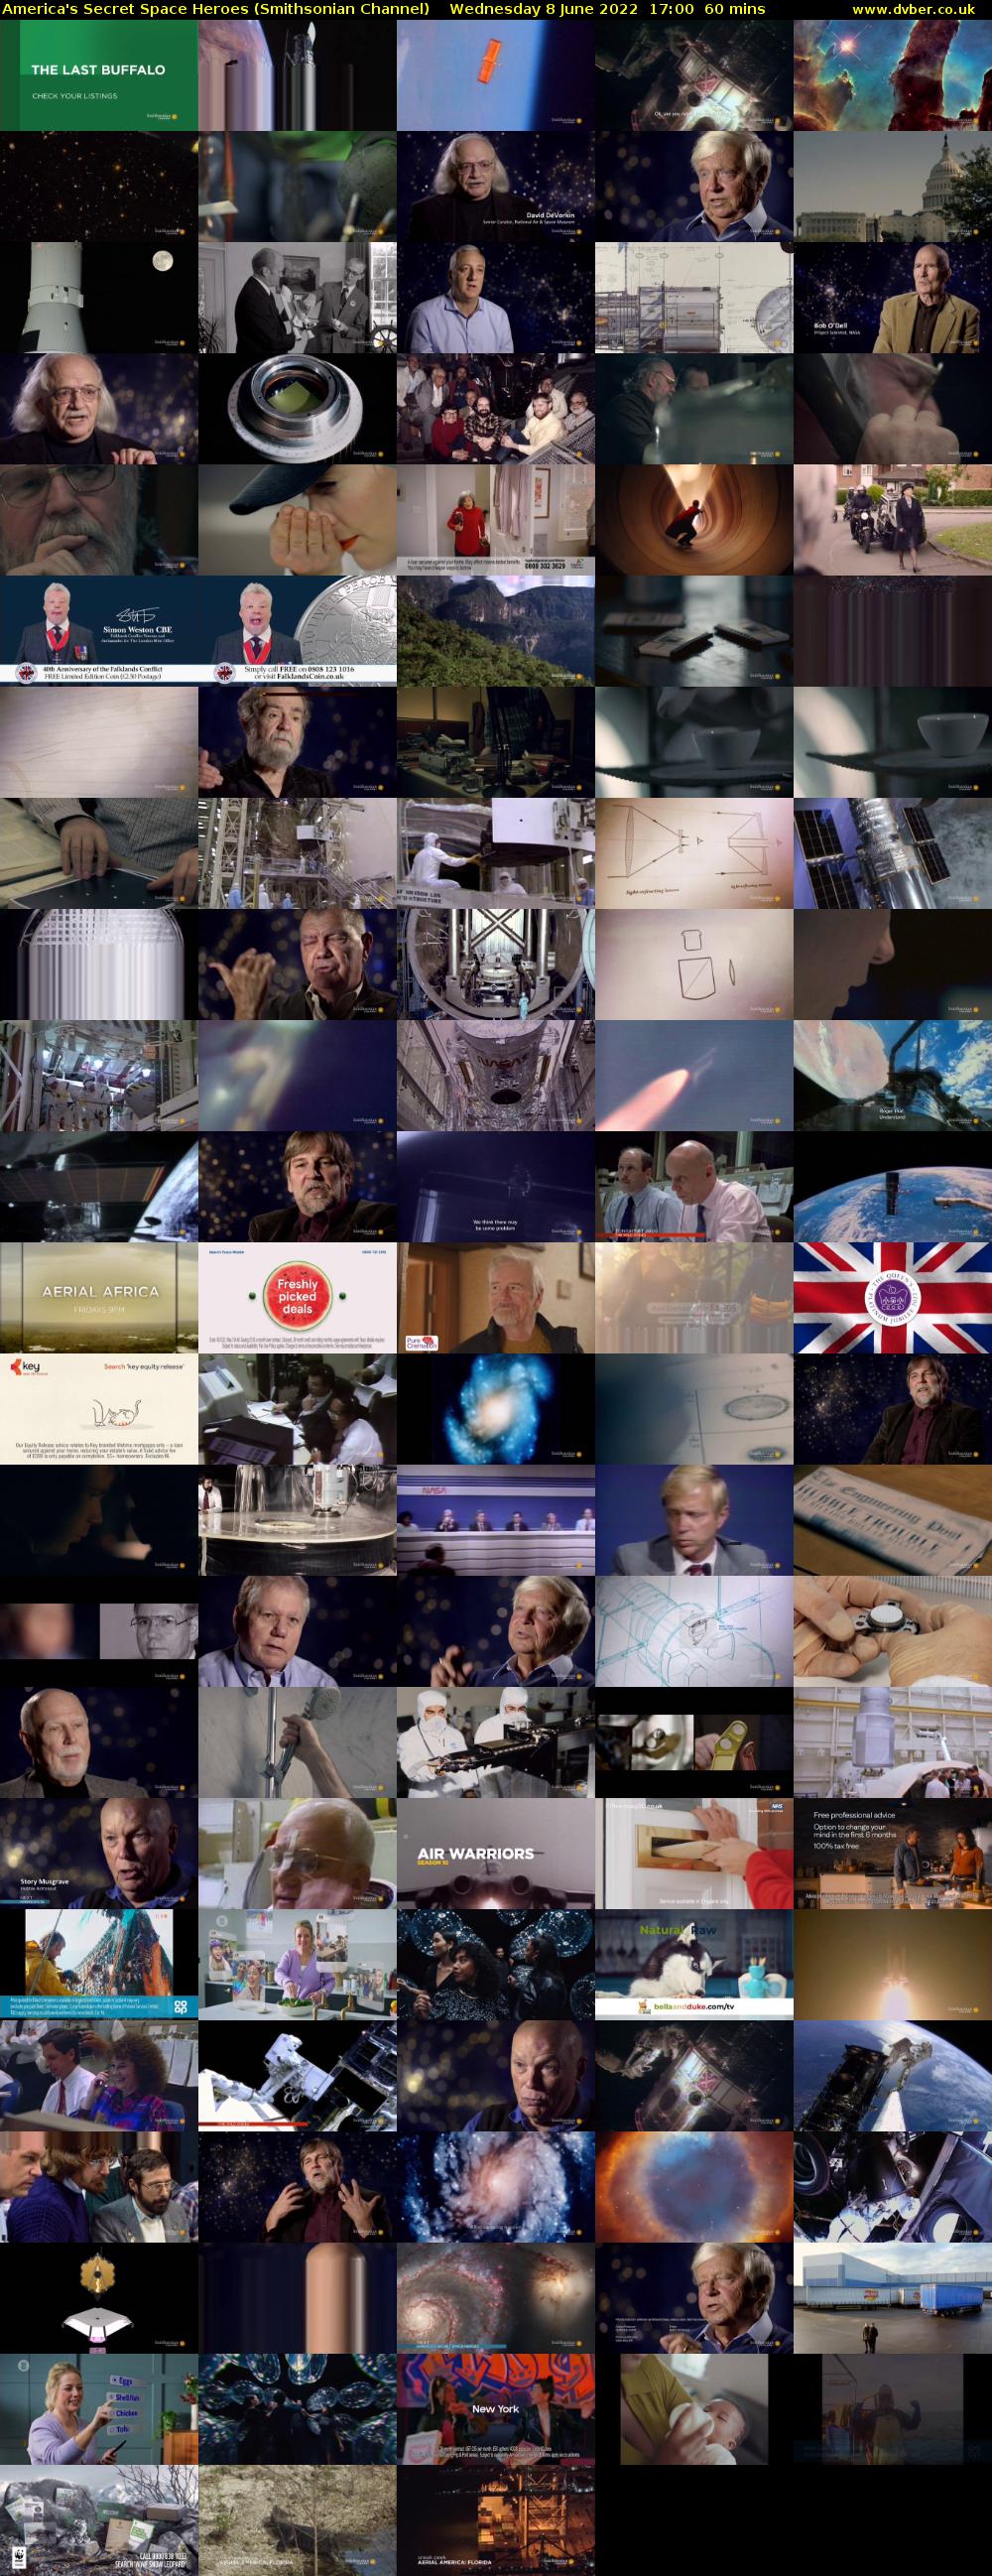 America's Secret Space Heroes (Smithsonian Channel) Wednesday 8 June 2022 17:00 - 18:00